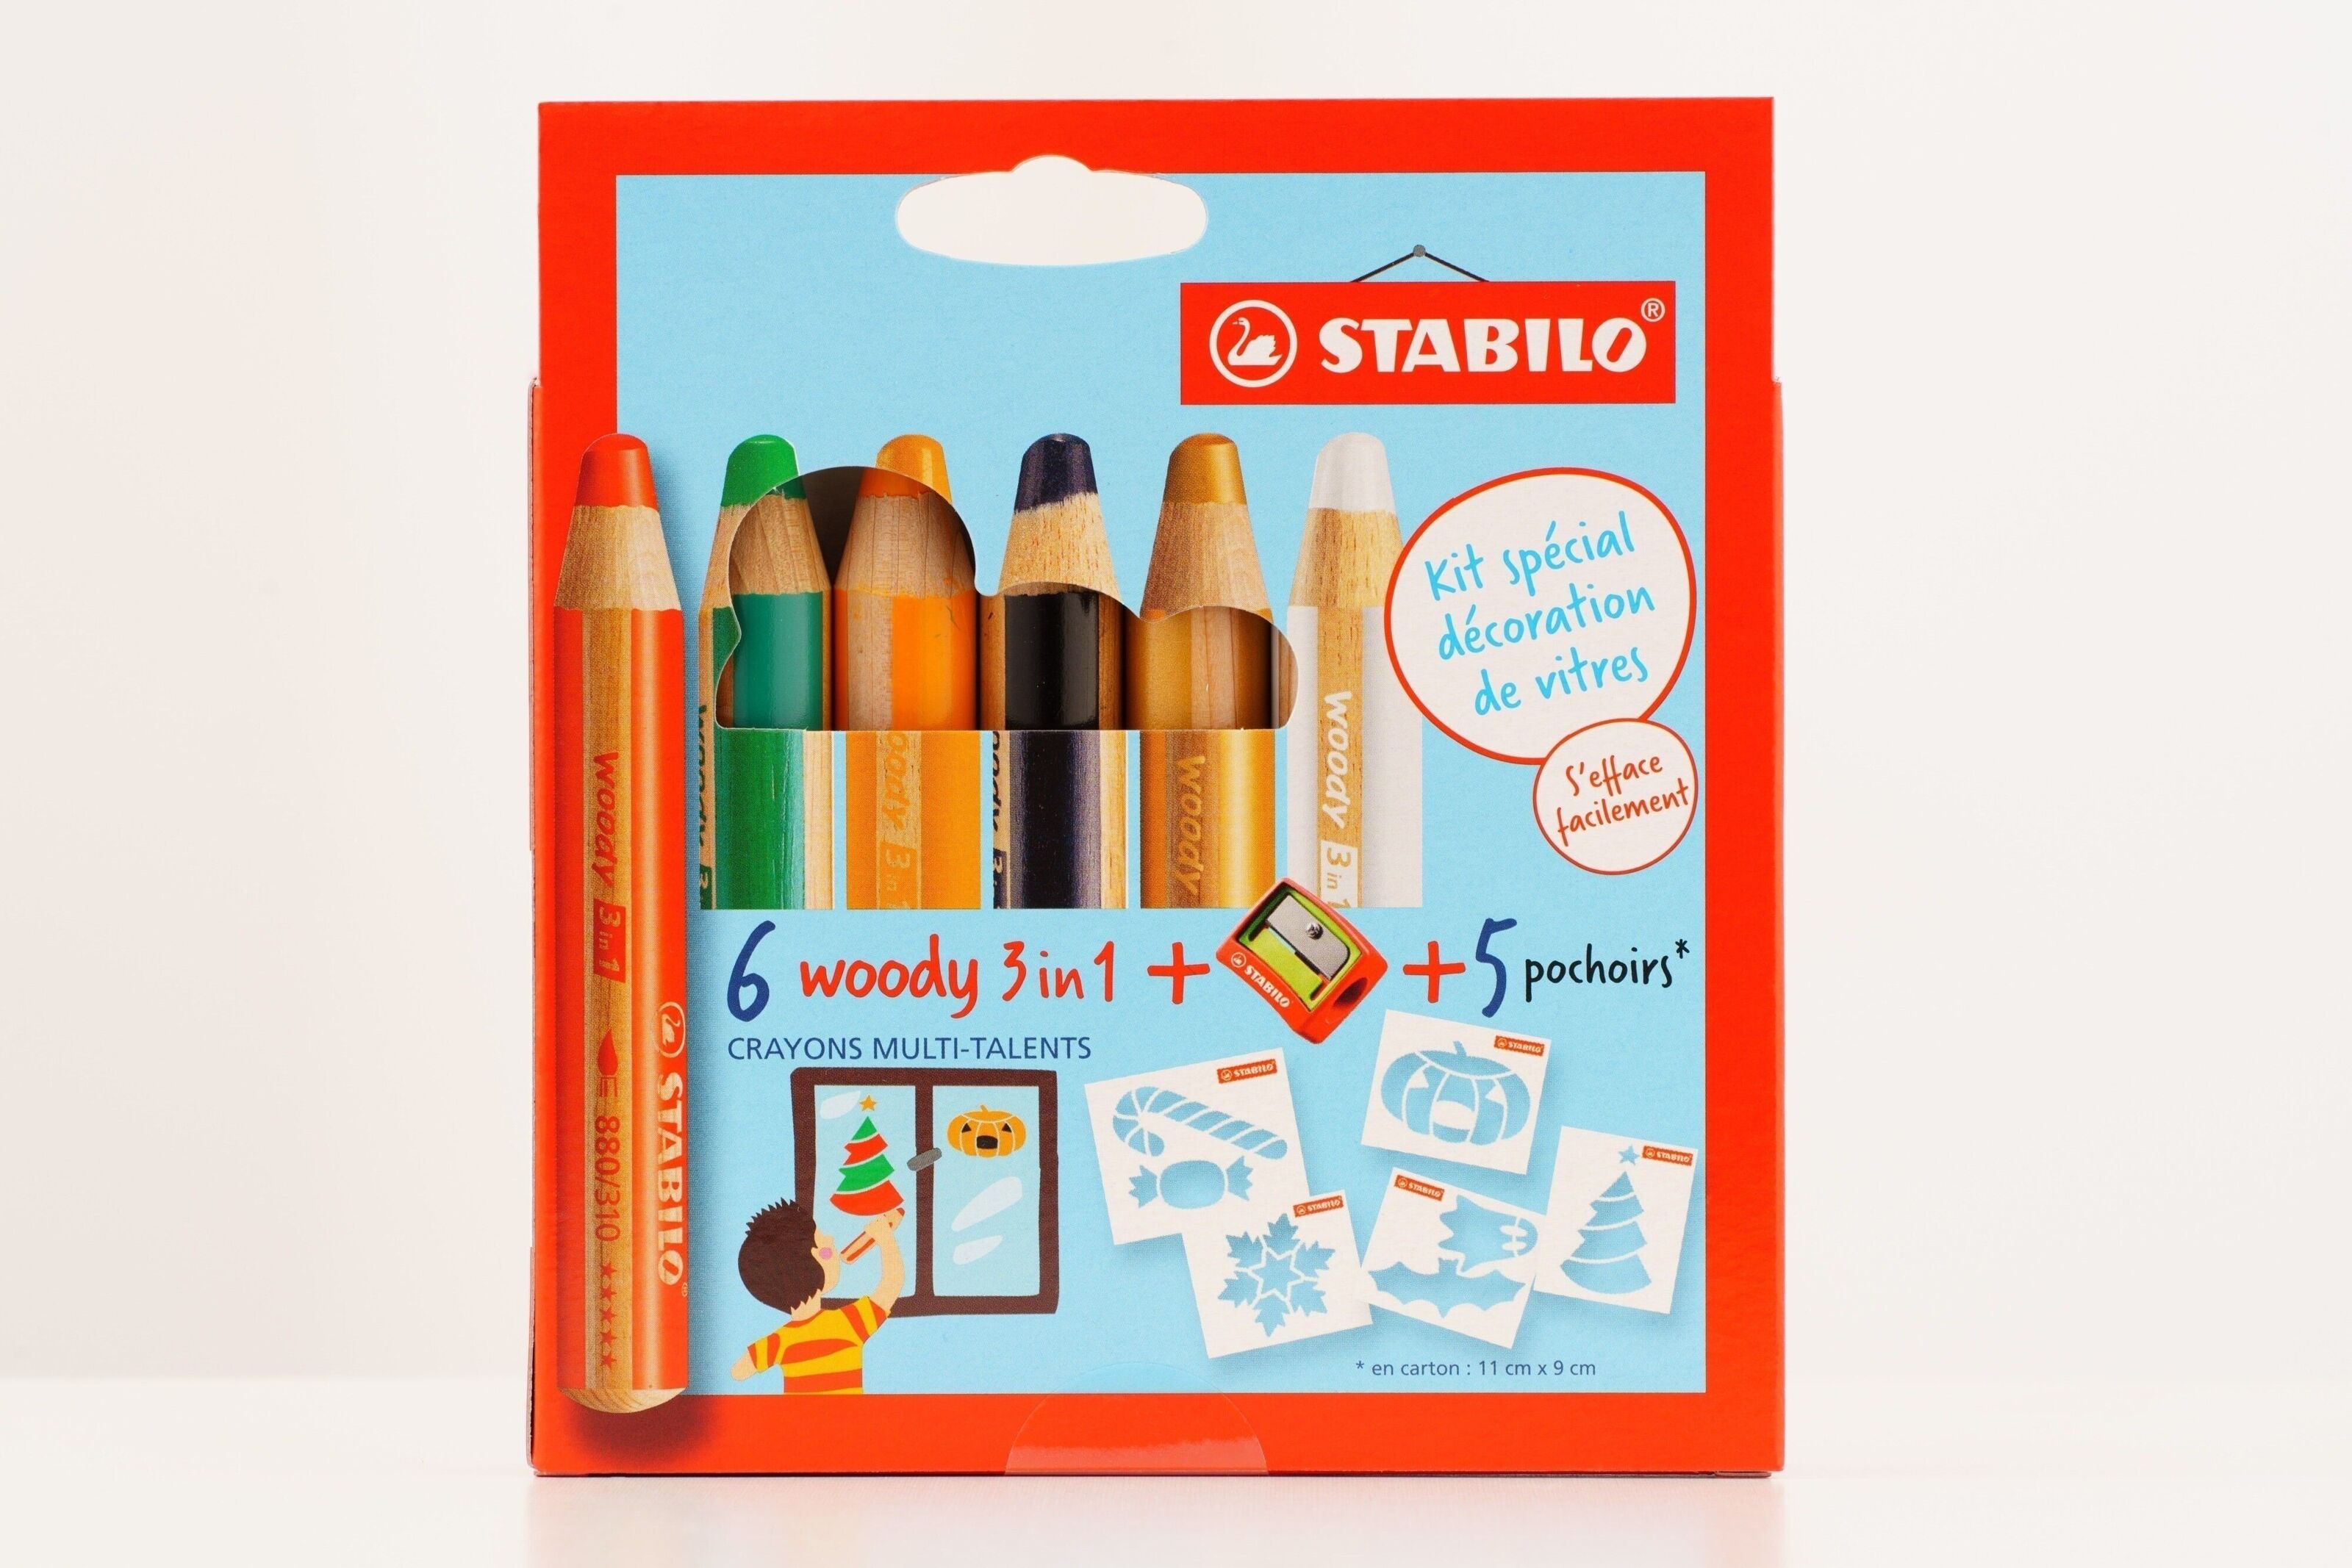 Graphite pencil STABILO Swano pastel - www.stabilo.co.uk